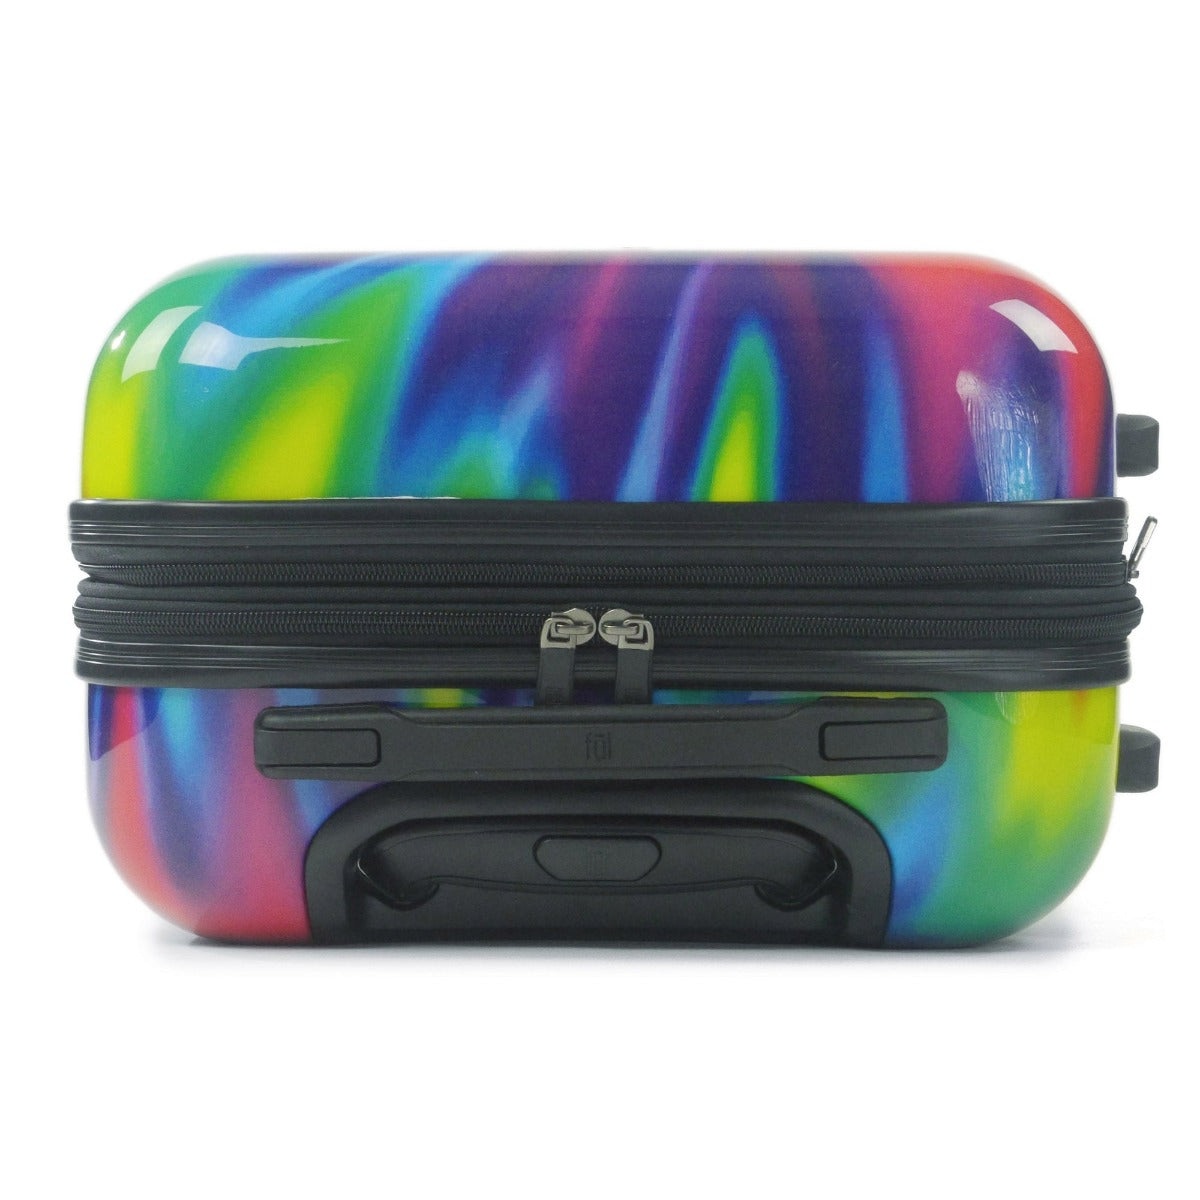 22" tie dye Rainbow Swirl Hard Sided Spinner Suitcase Rolling Luggage 